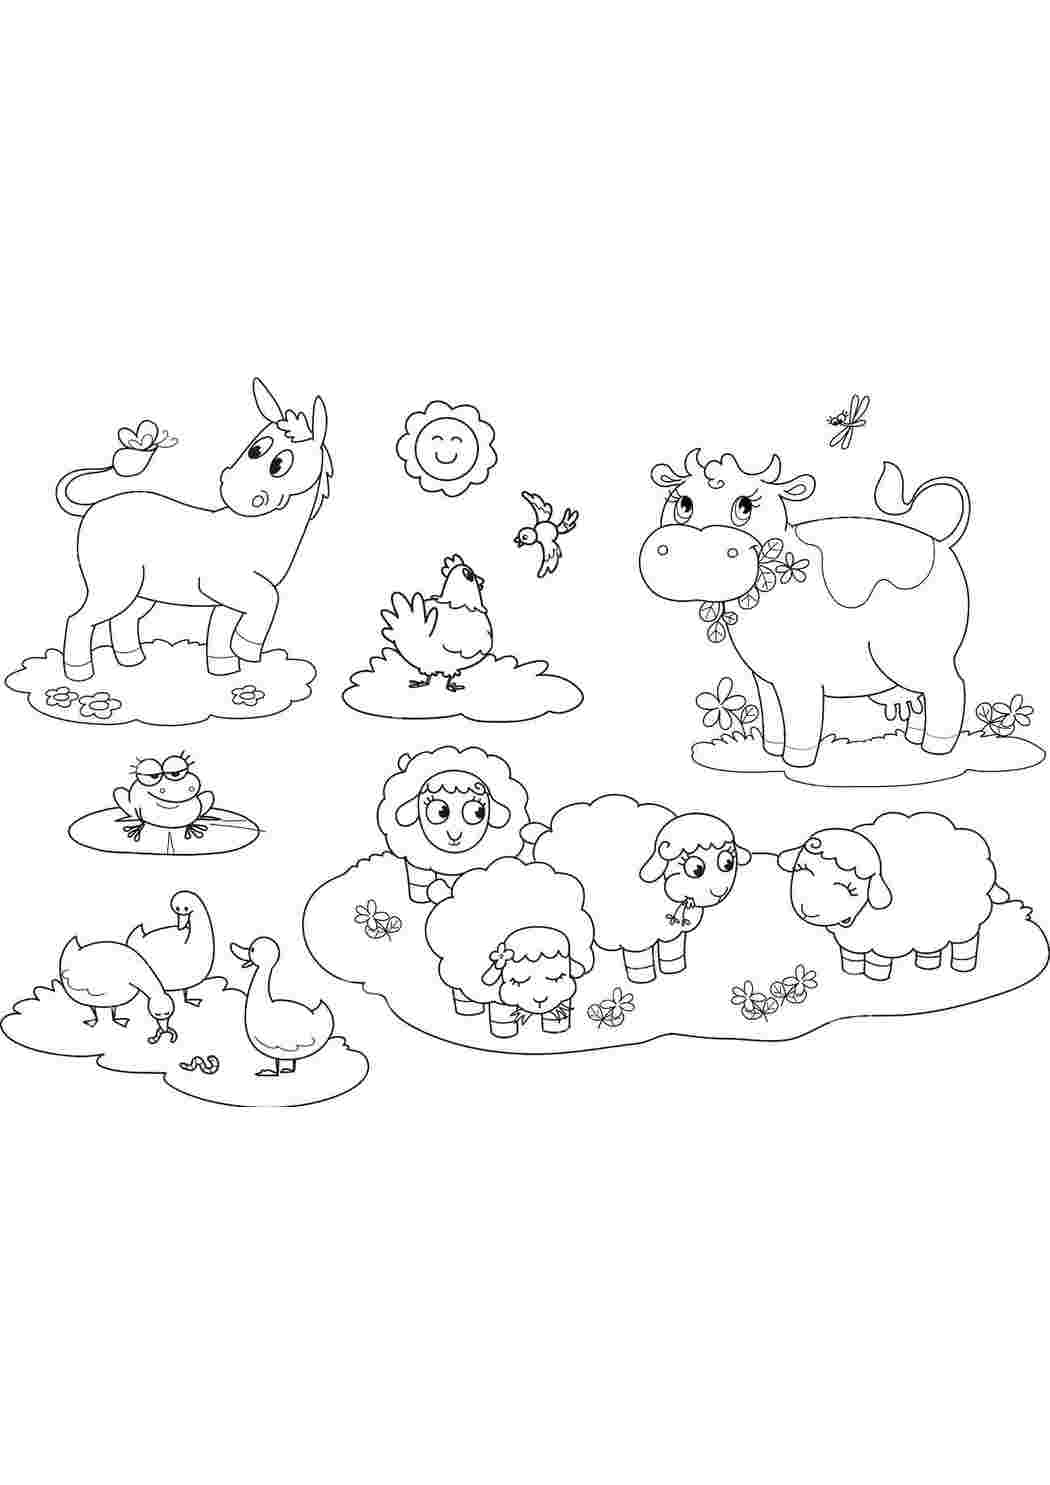 Раскраски Ослик, курочка, лягушка, гуси, коровка и овечки играют вместе животные животные, игра, веселье